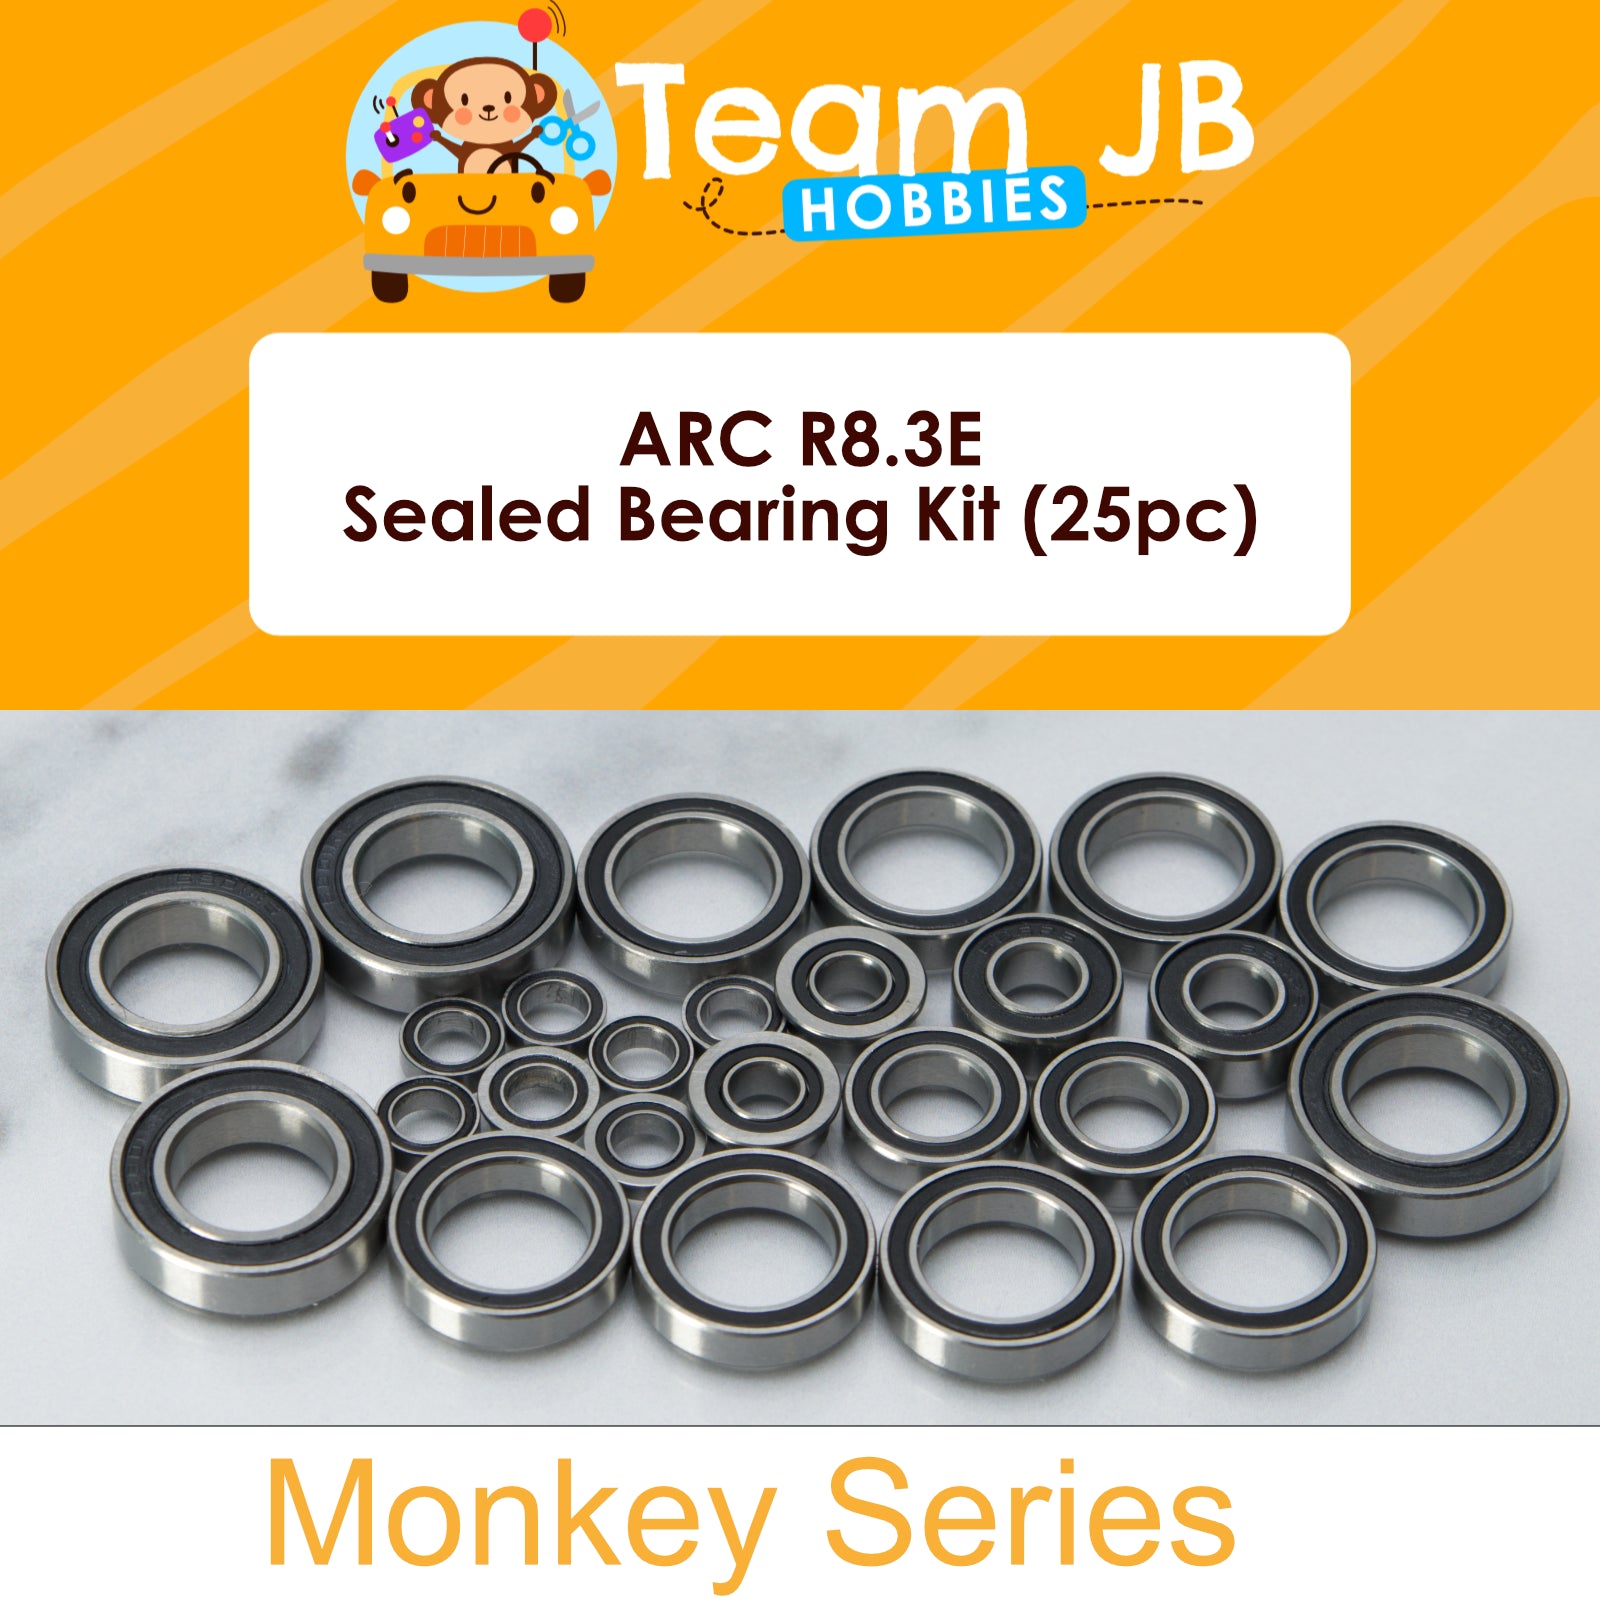 ARC R8.3E - Sealed Bearing Kit